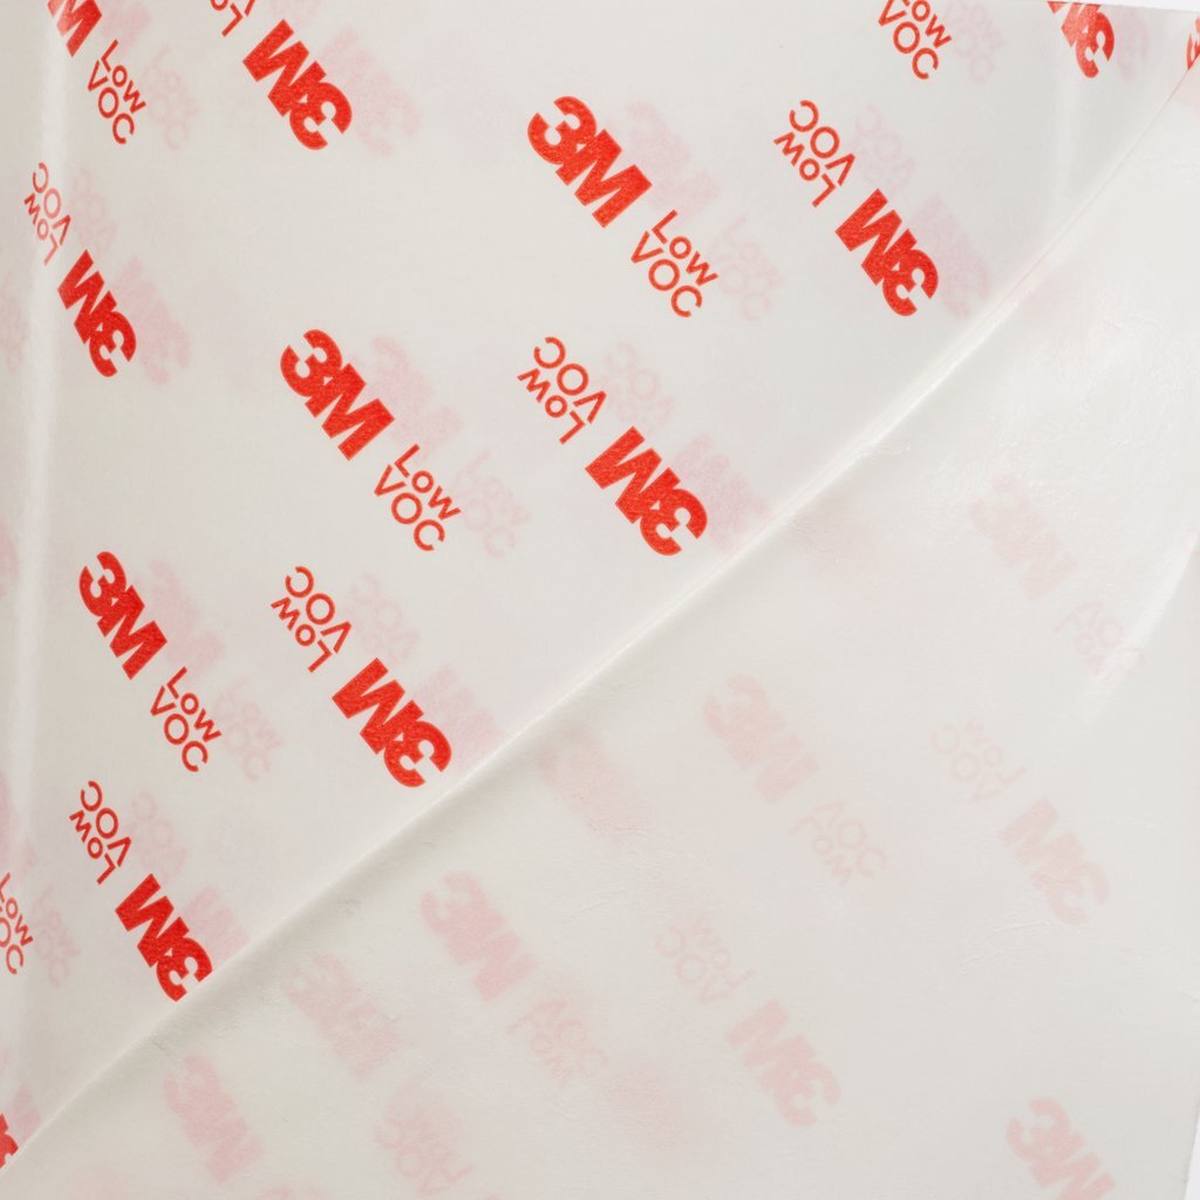 3M Dubbelzijdig plakband met vliespapier als rug 99015LVC, wit, 1500 mm x 200 m, 0,15 mm